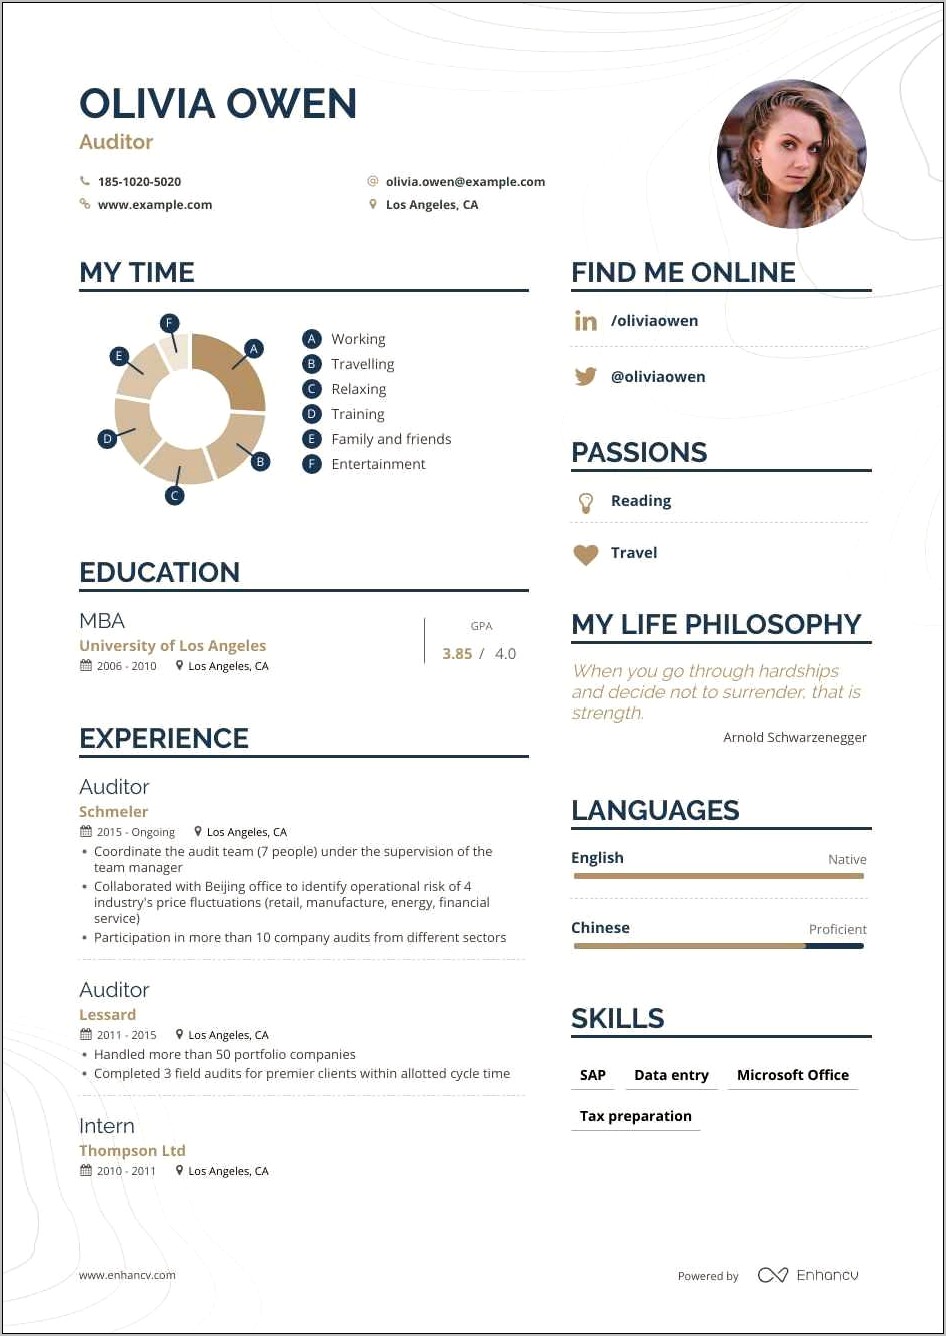 Audit Intern Job Description For Resume